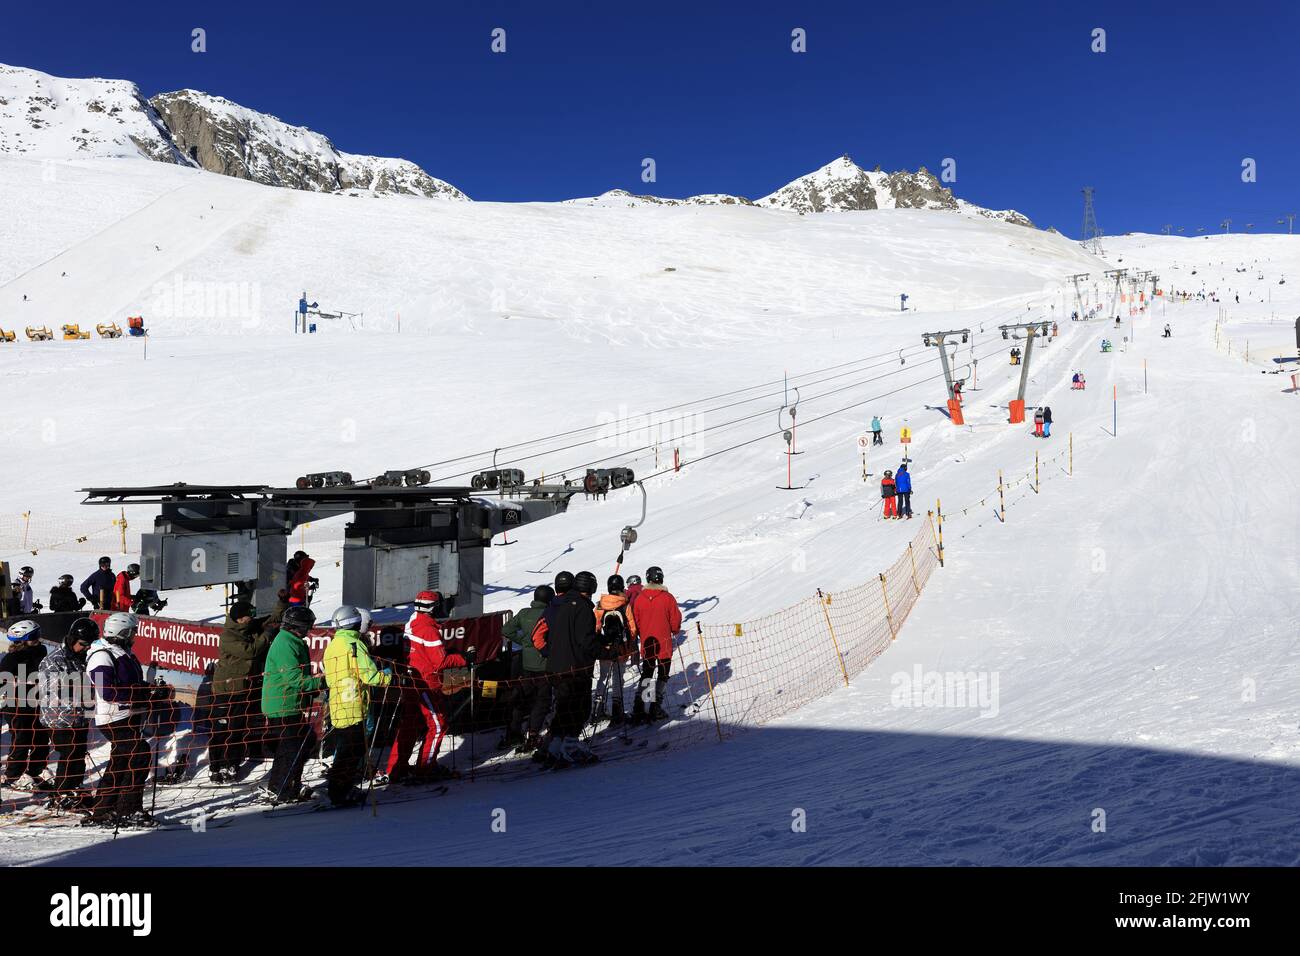 Switzerland, Canton of Valais, Fiesch, ski resort of Fiescheralp, downhill skiing, skier Stock Photo